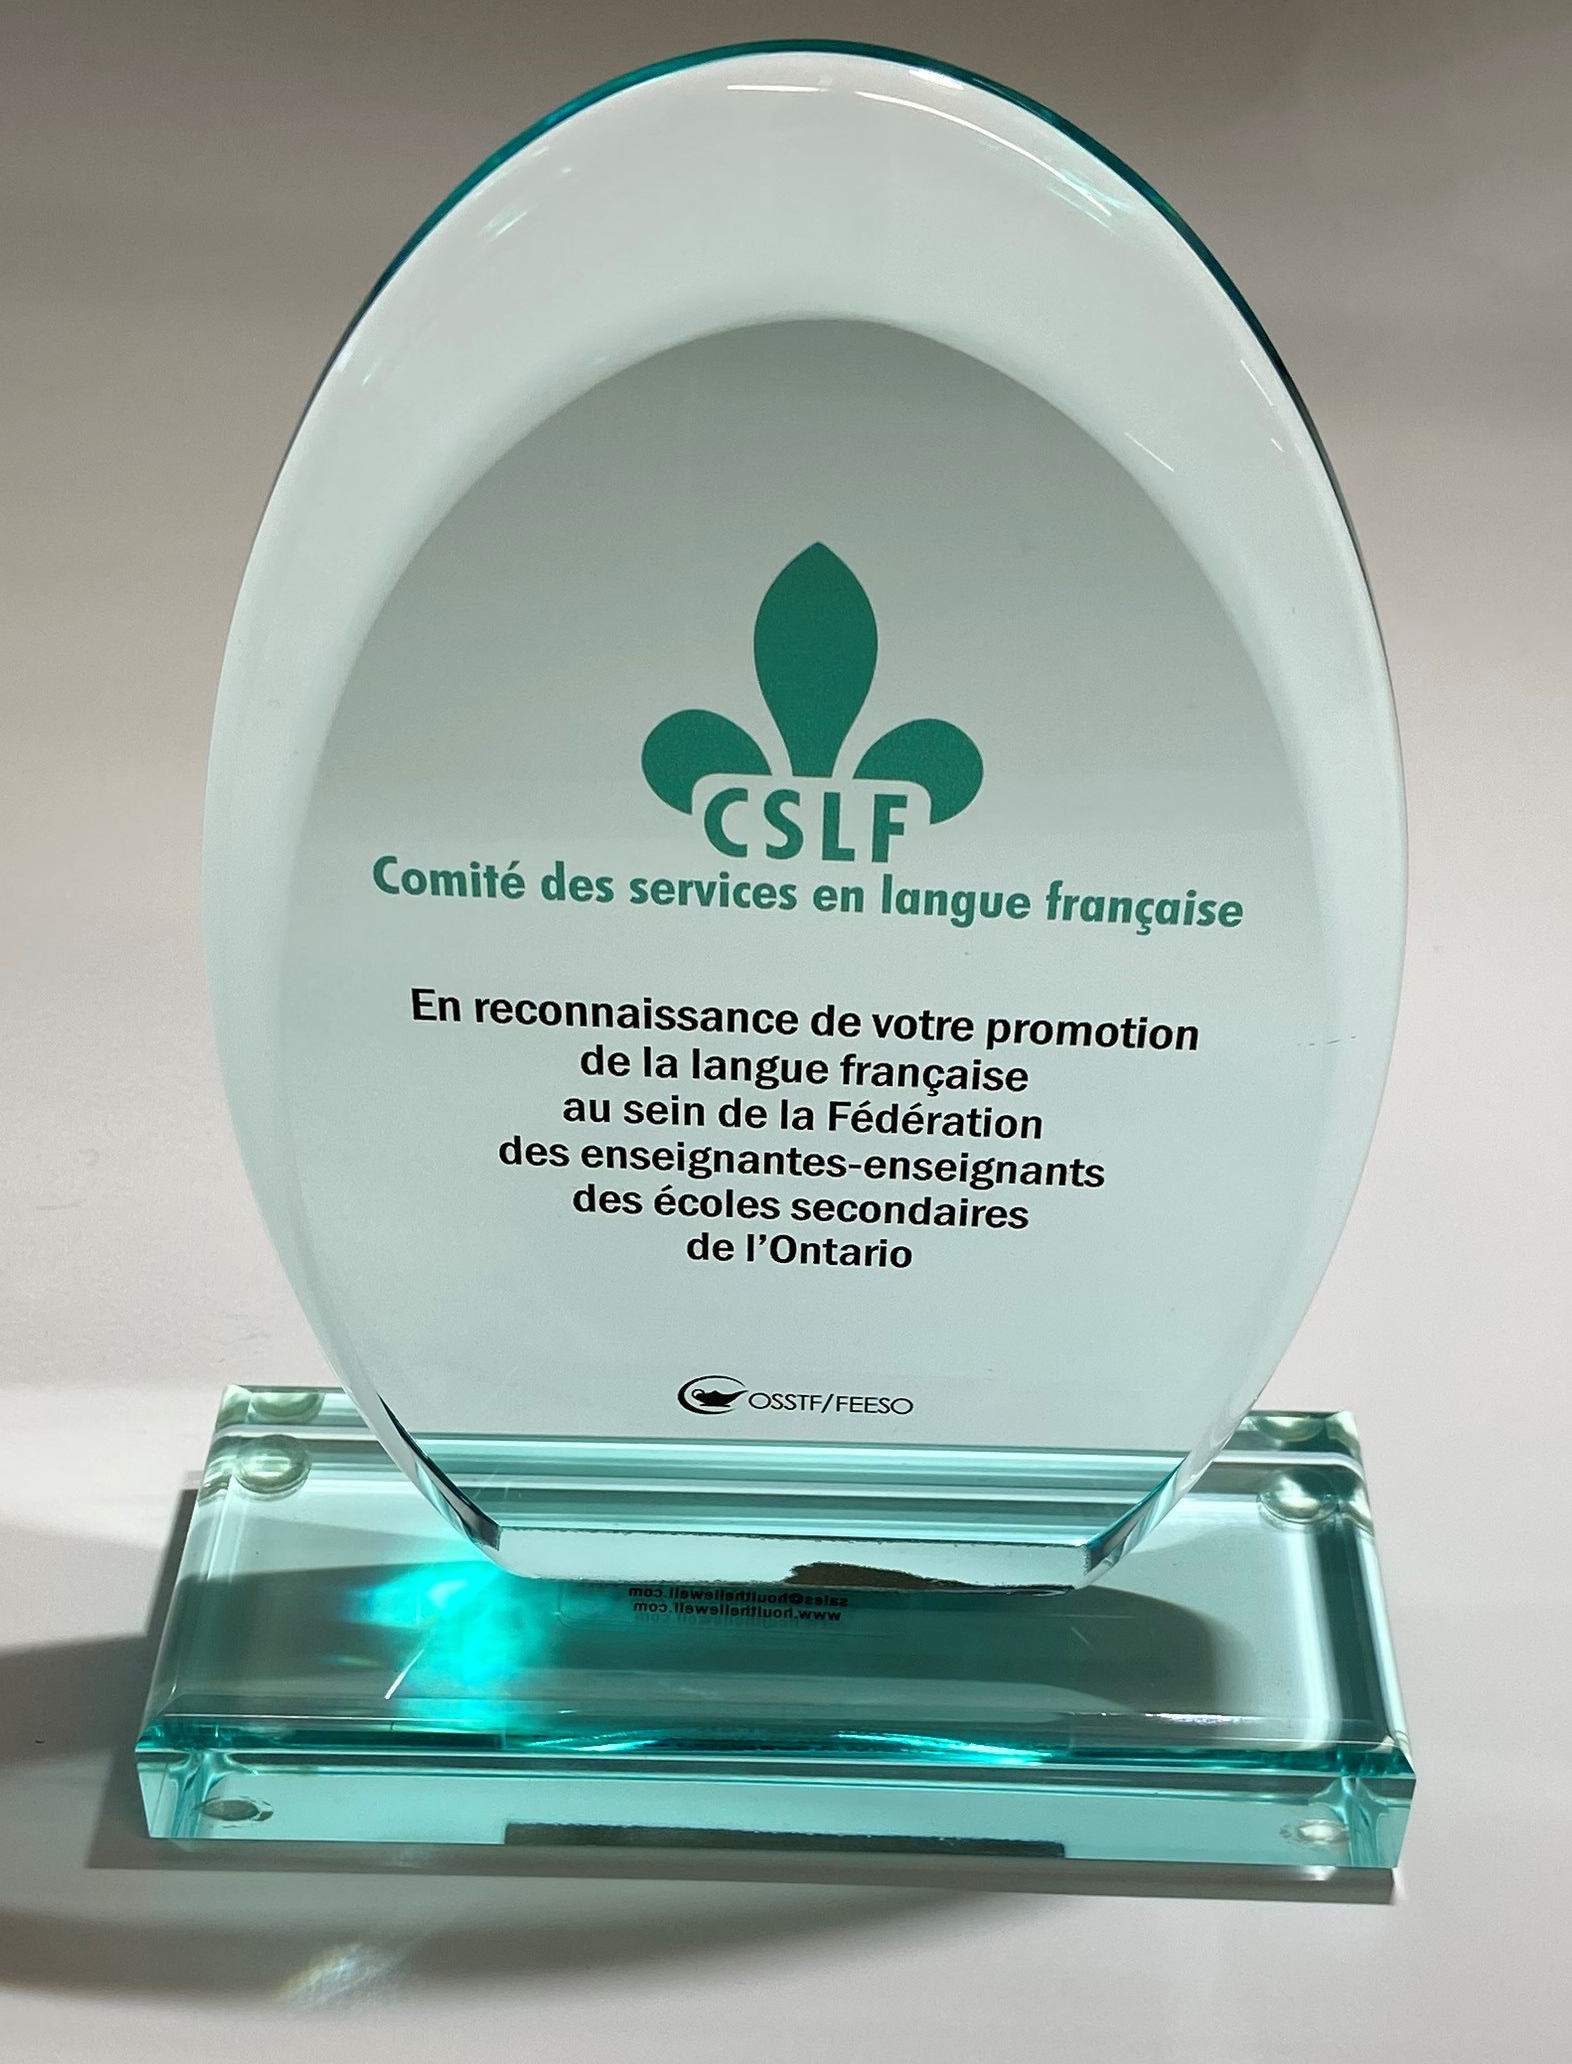 CSLF award trophy